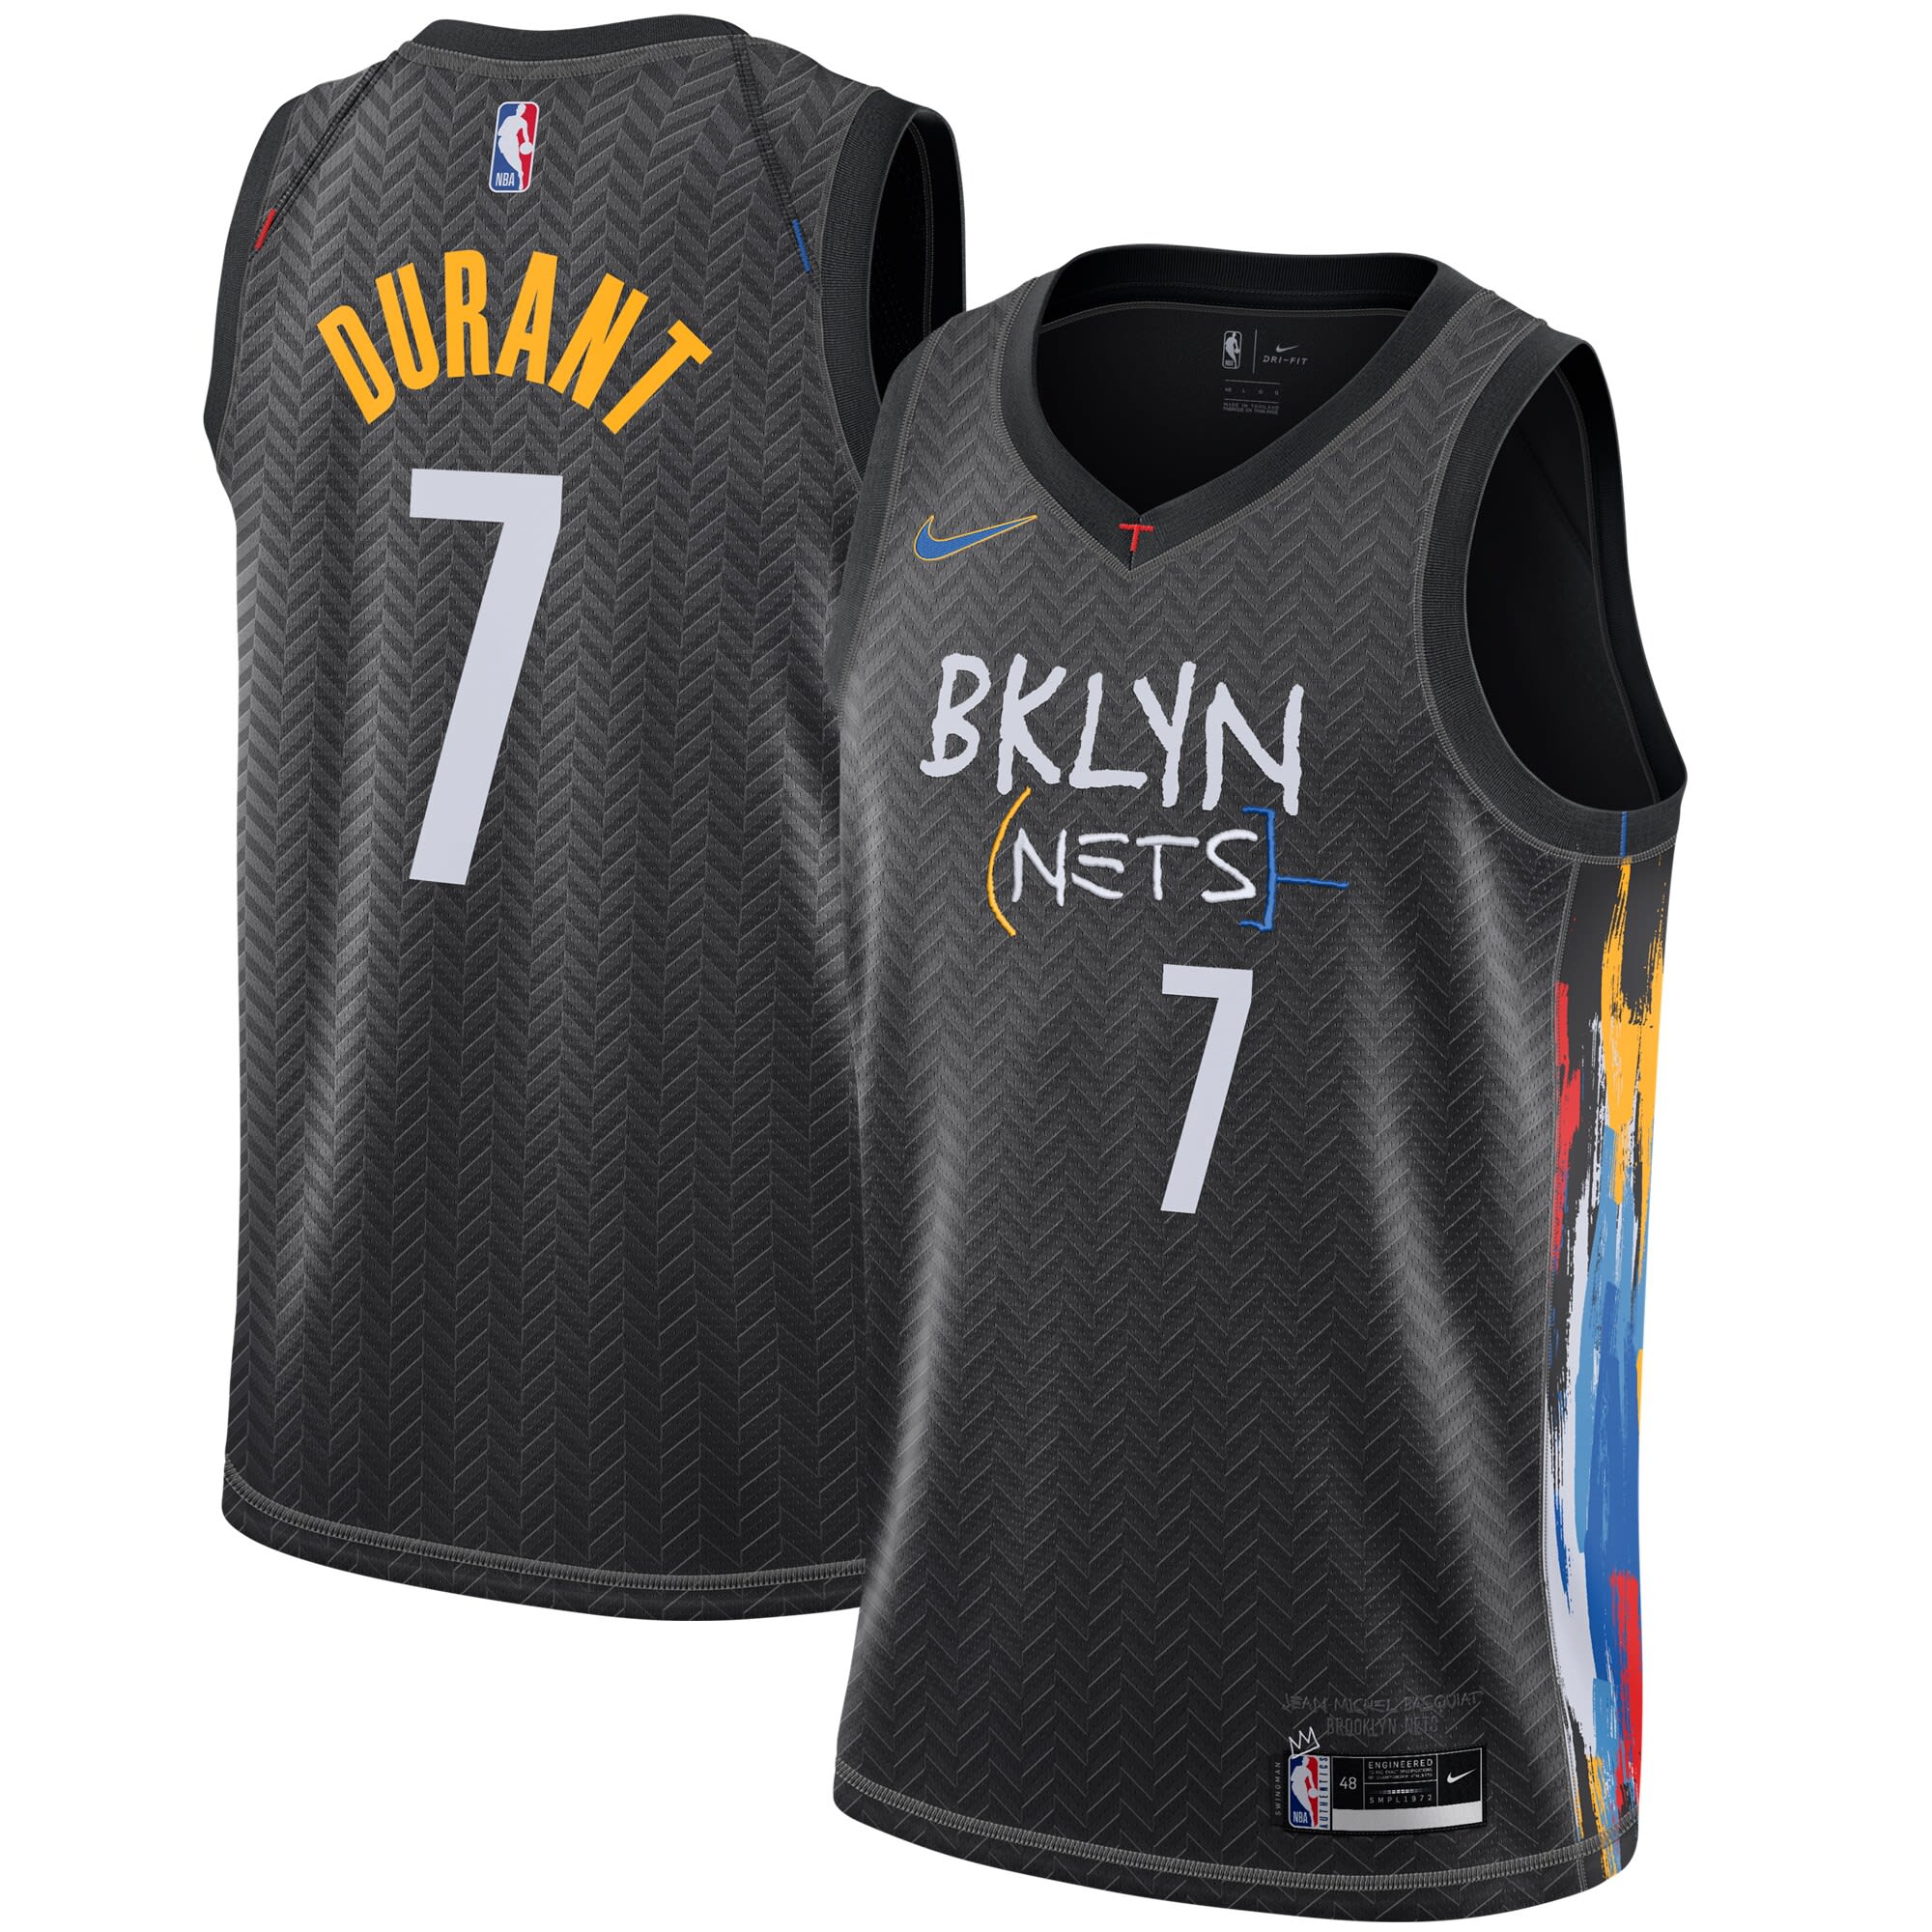 brooklyn nets uniform design